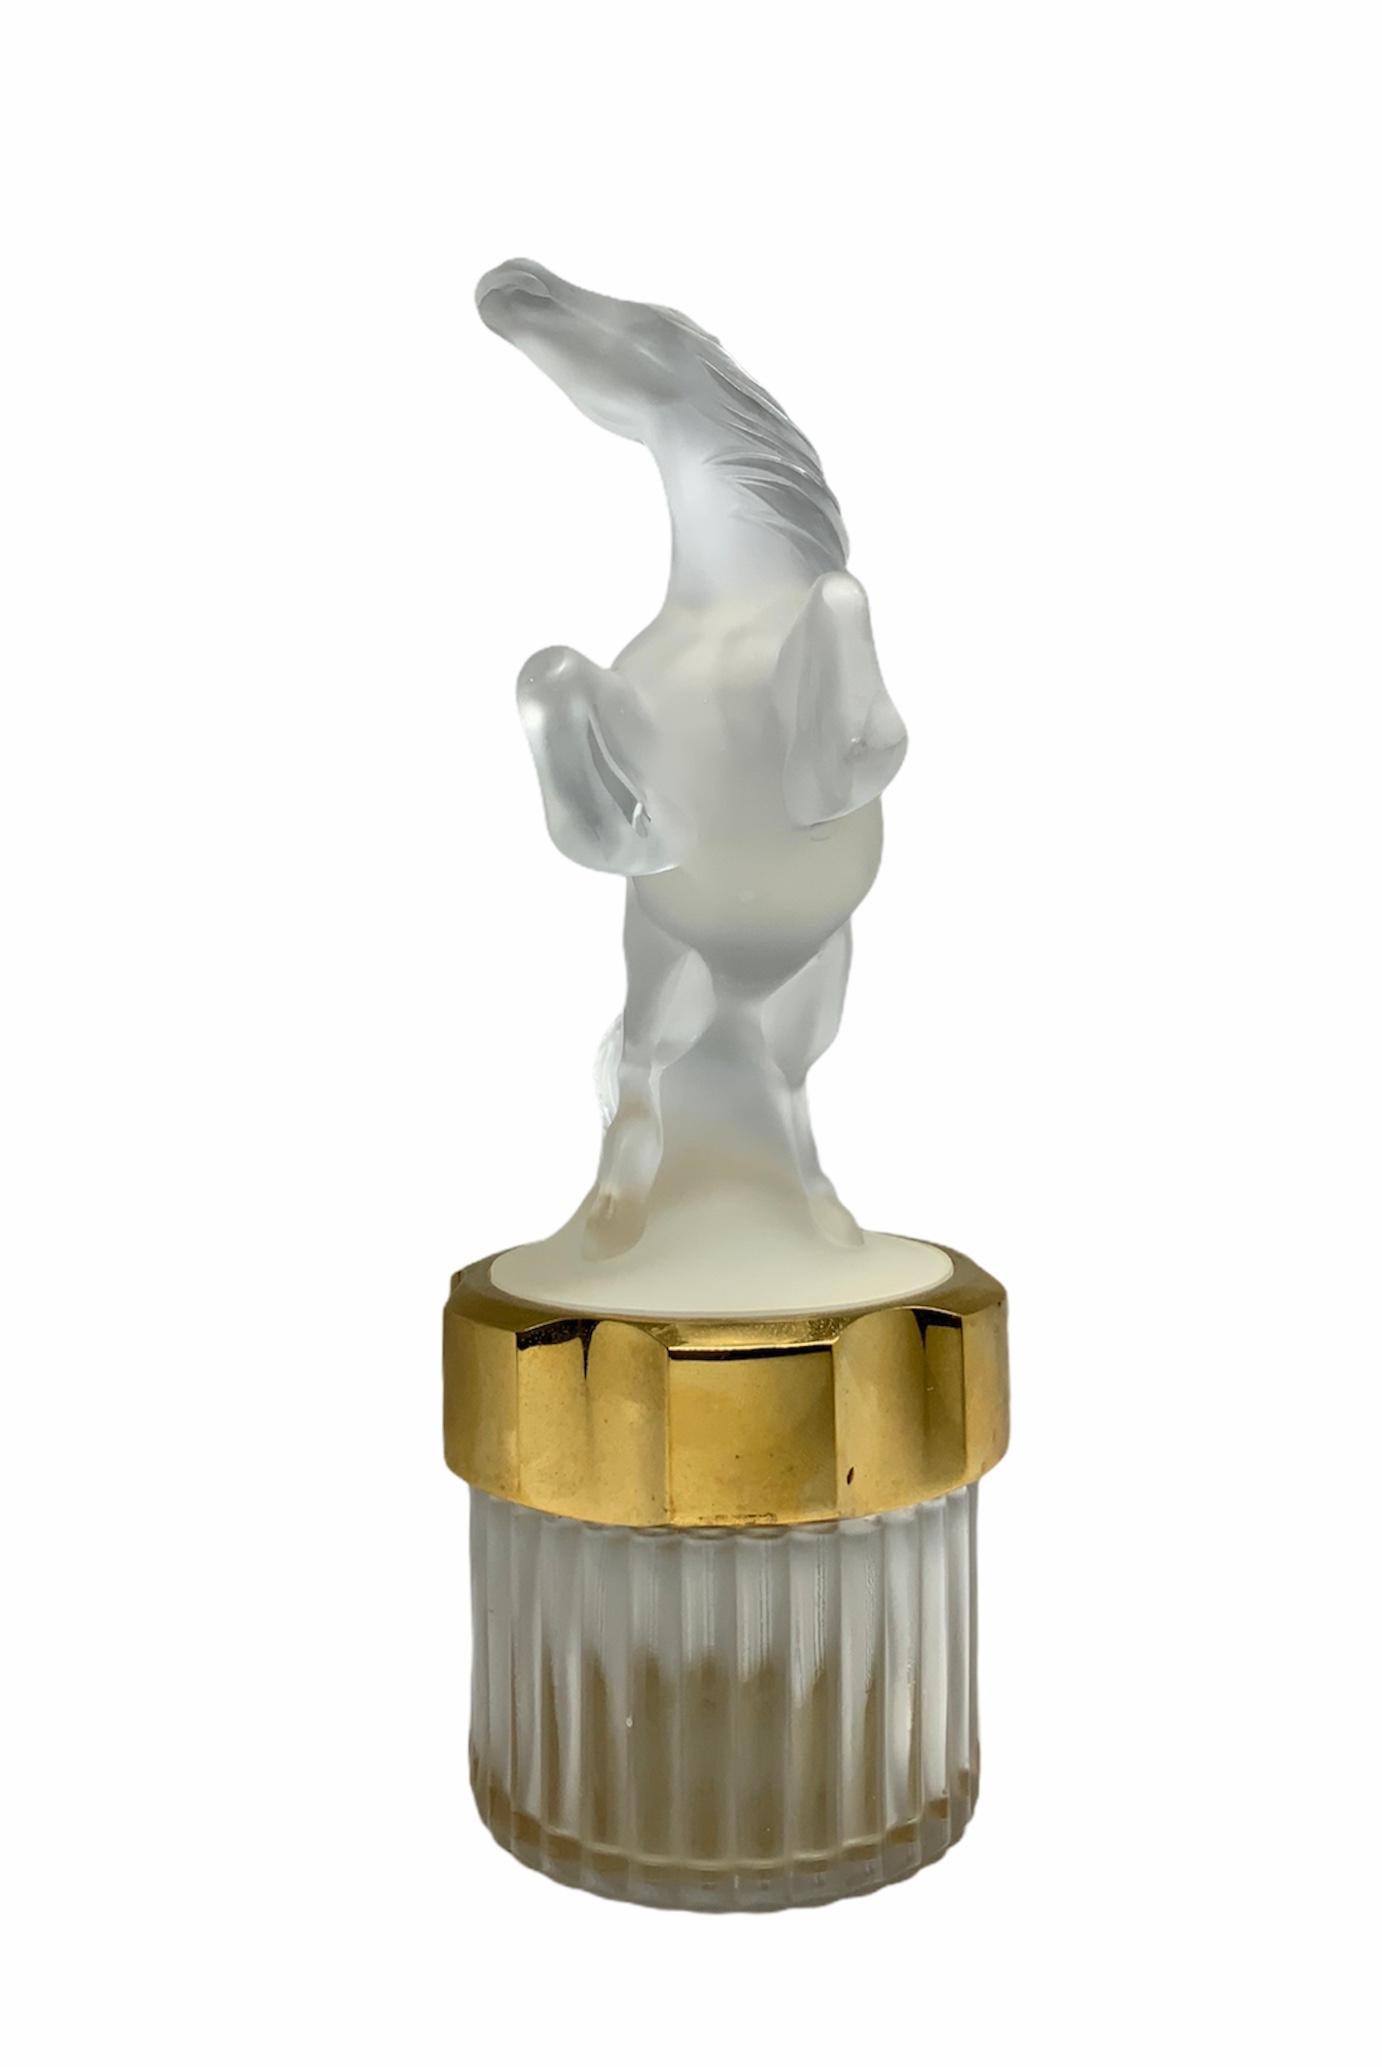 Dies ist ein Lalique Crystal Flacon Collection 